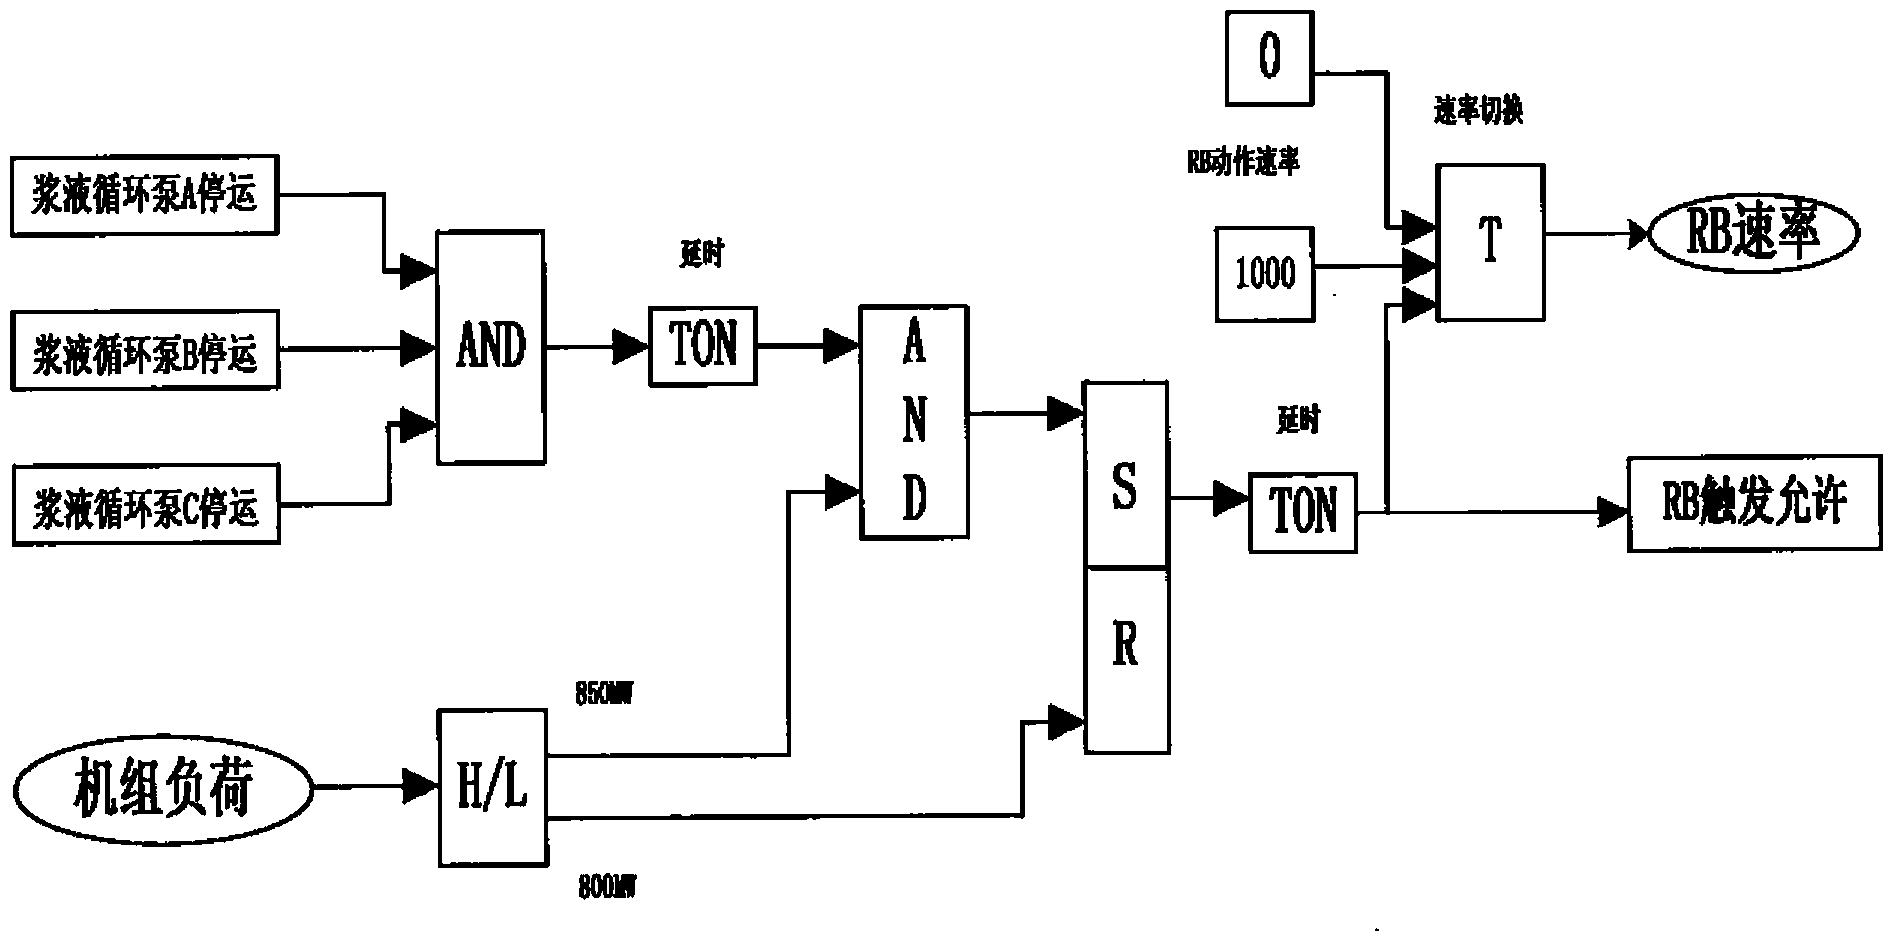 Slurry circulating pump RB control method of thermal power generating unit